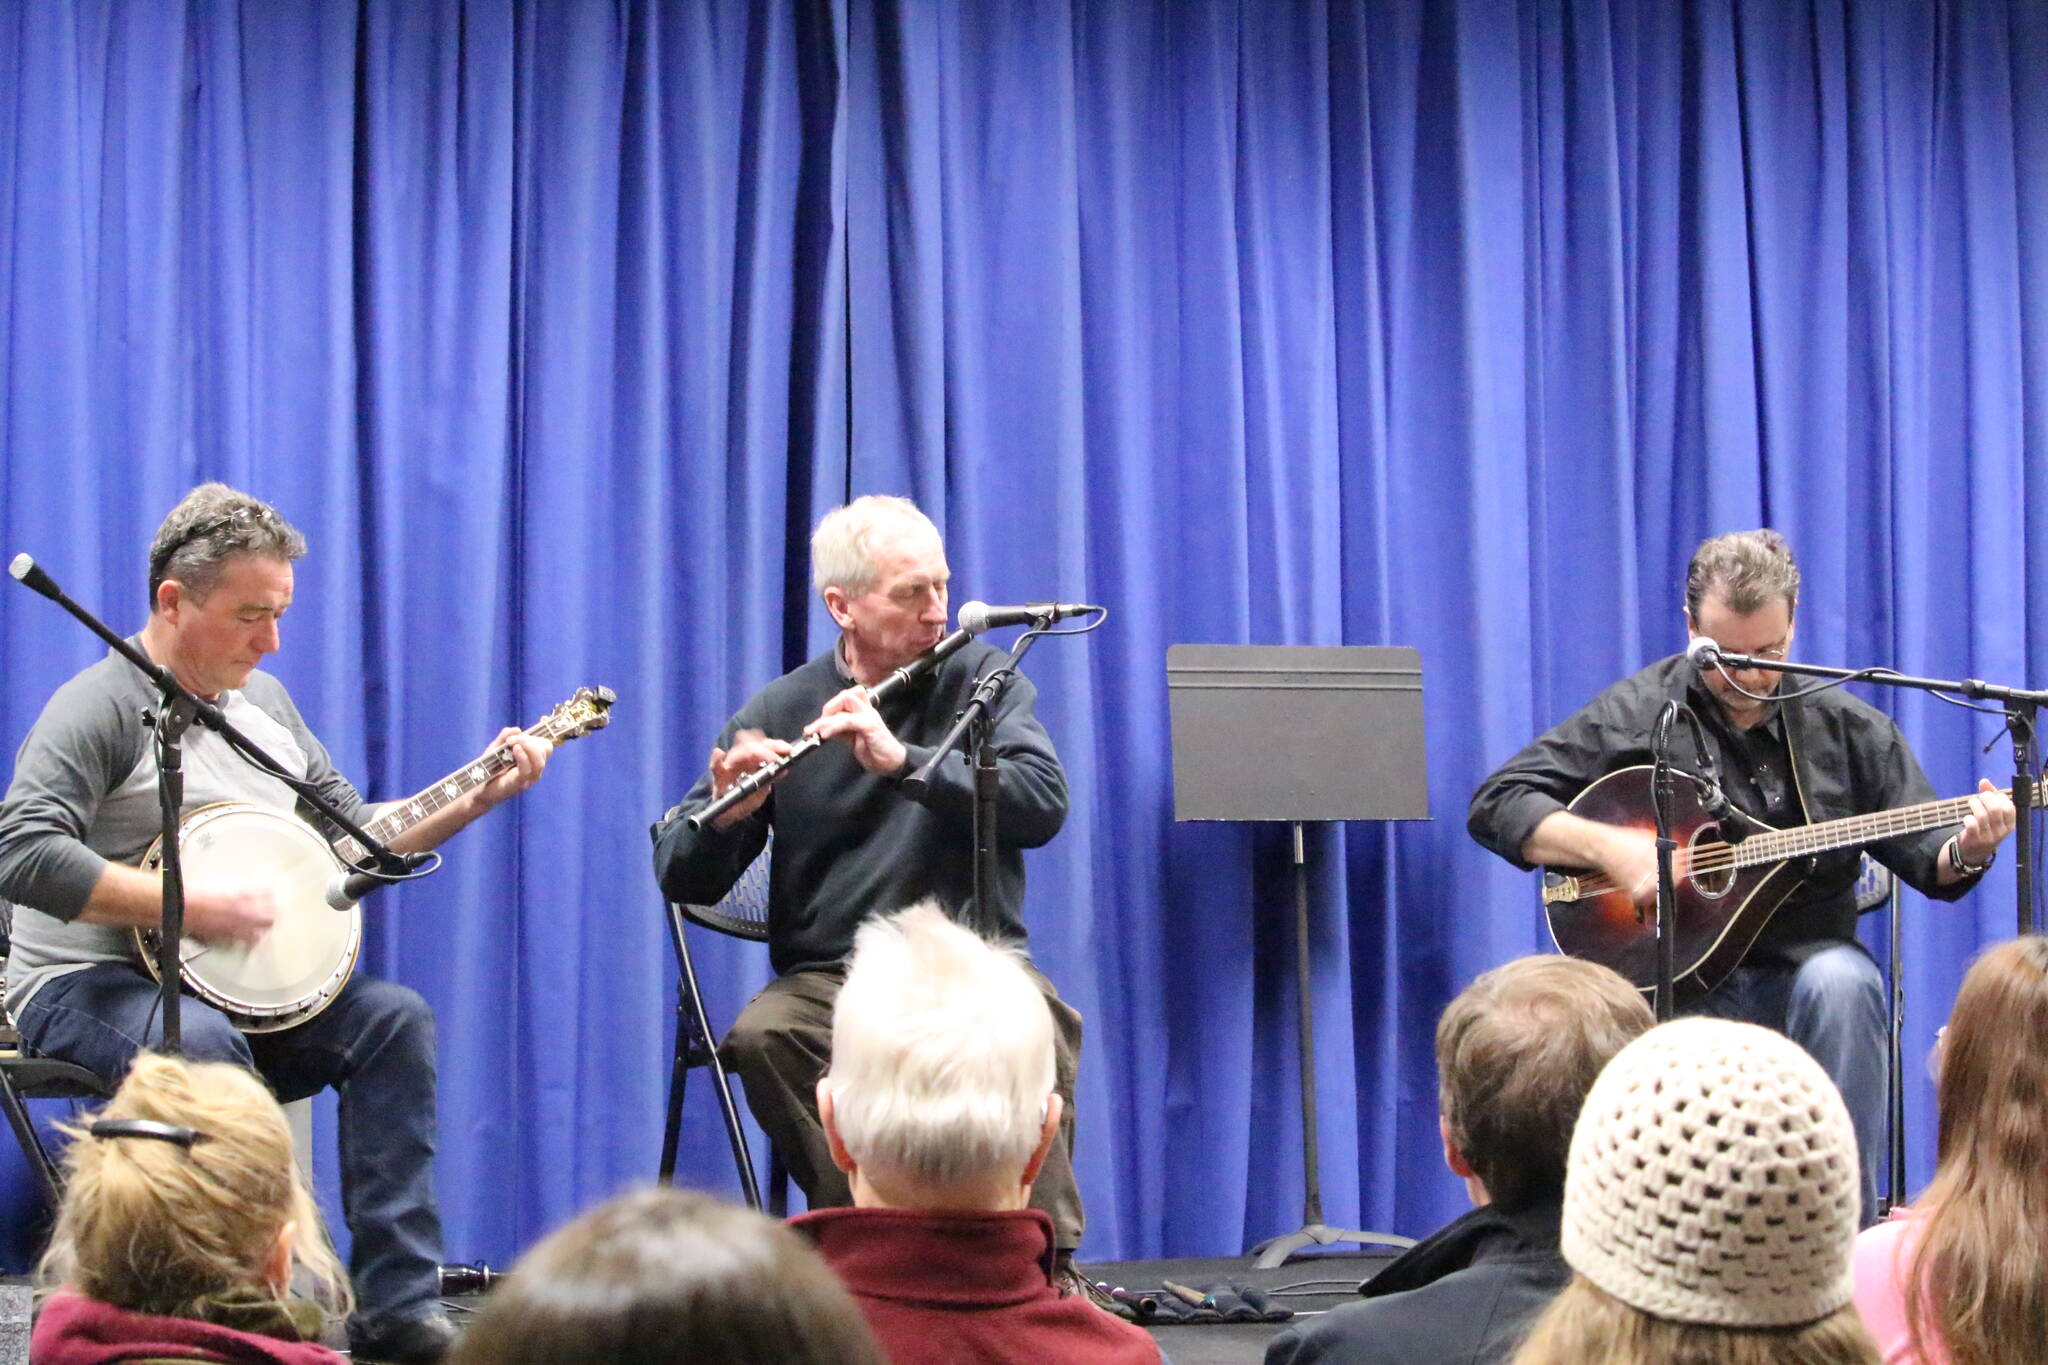 From left, John Walsh, John Skelton and Pat Broaders perform at the annual Winter Concert of Traditional Irish Music at Kenai Peninsula College in Kenai, Alaska, on Jan. 24, 2020. (Photo by Brian Mazurek/Peninsula Clarion)